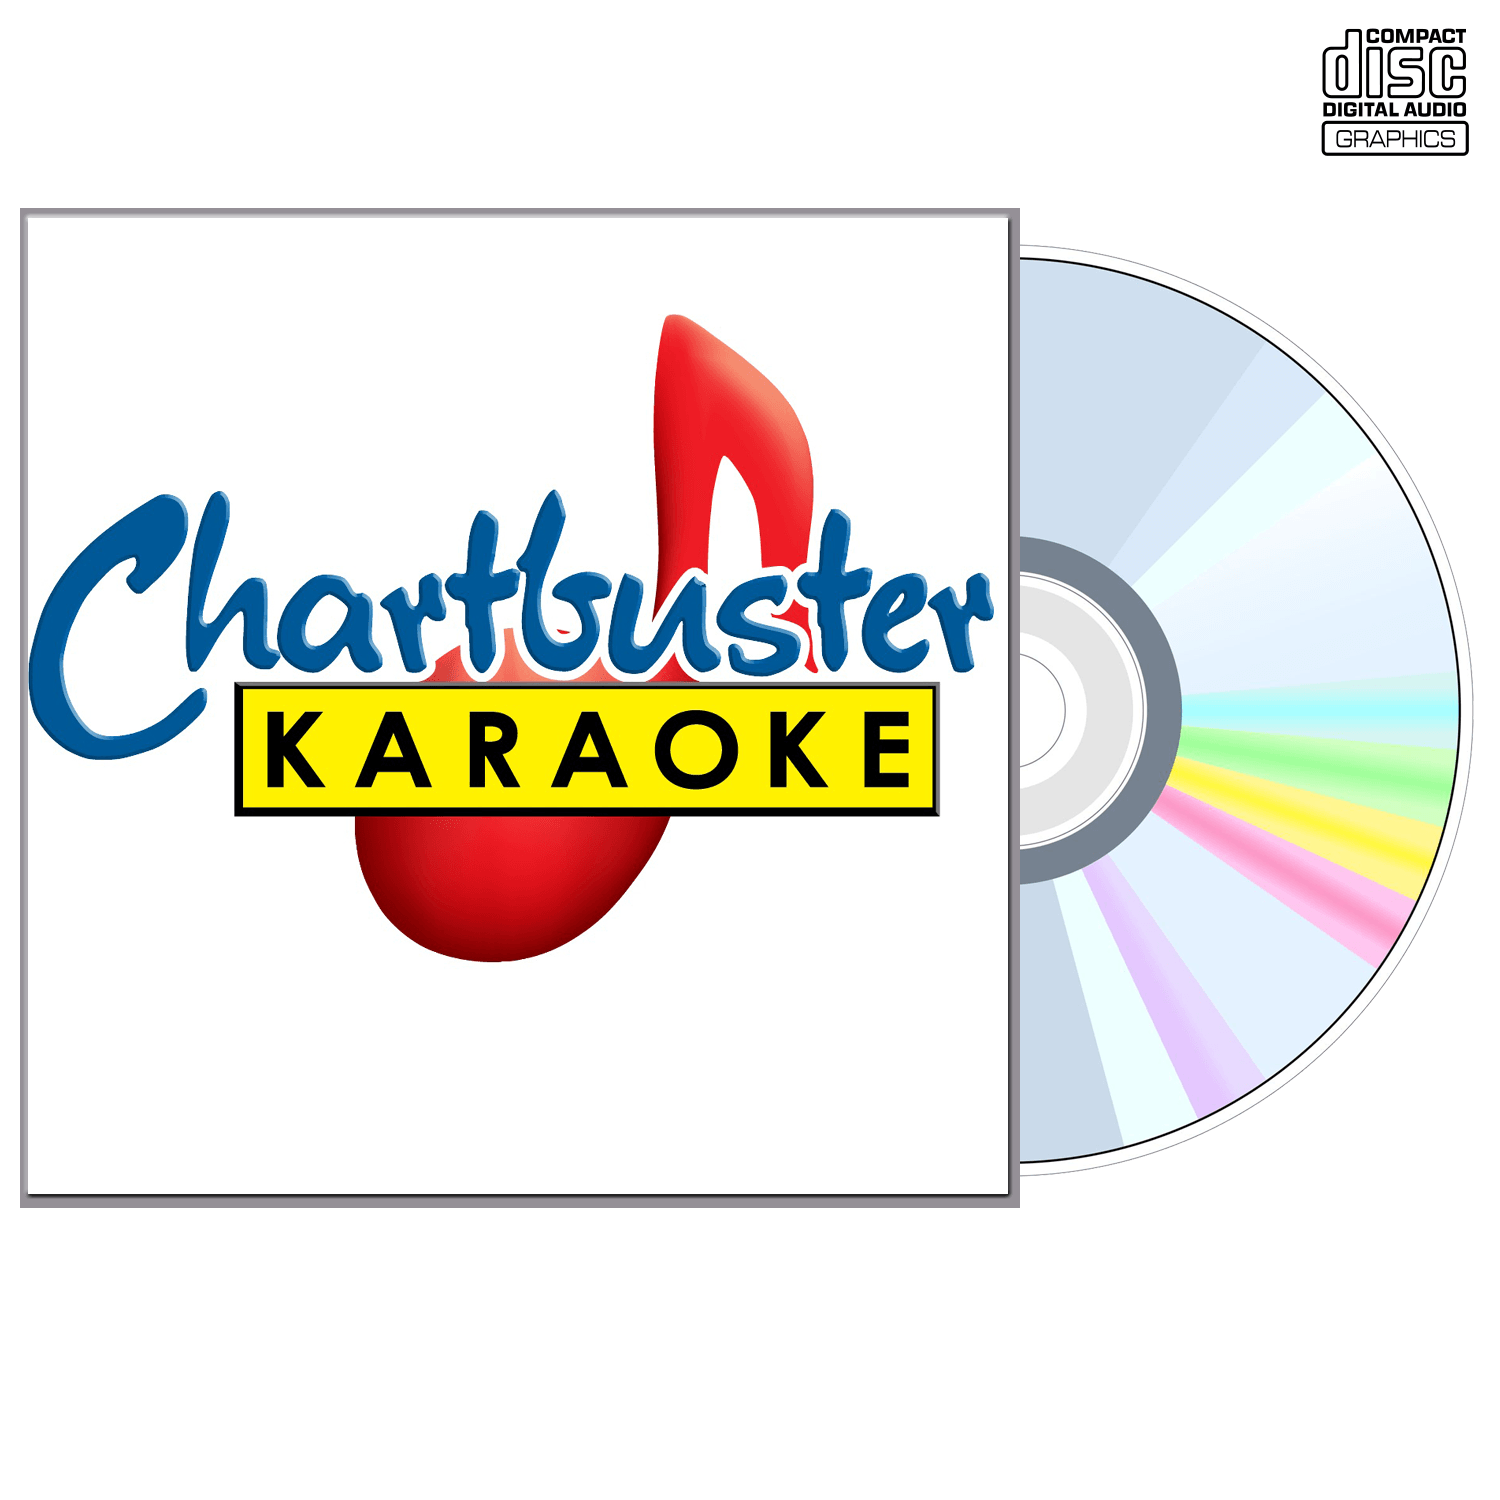 Doris Day - CD+G - Chartbuster Karaoke - Karaoke Home Entertainment